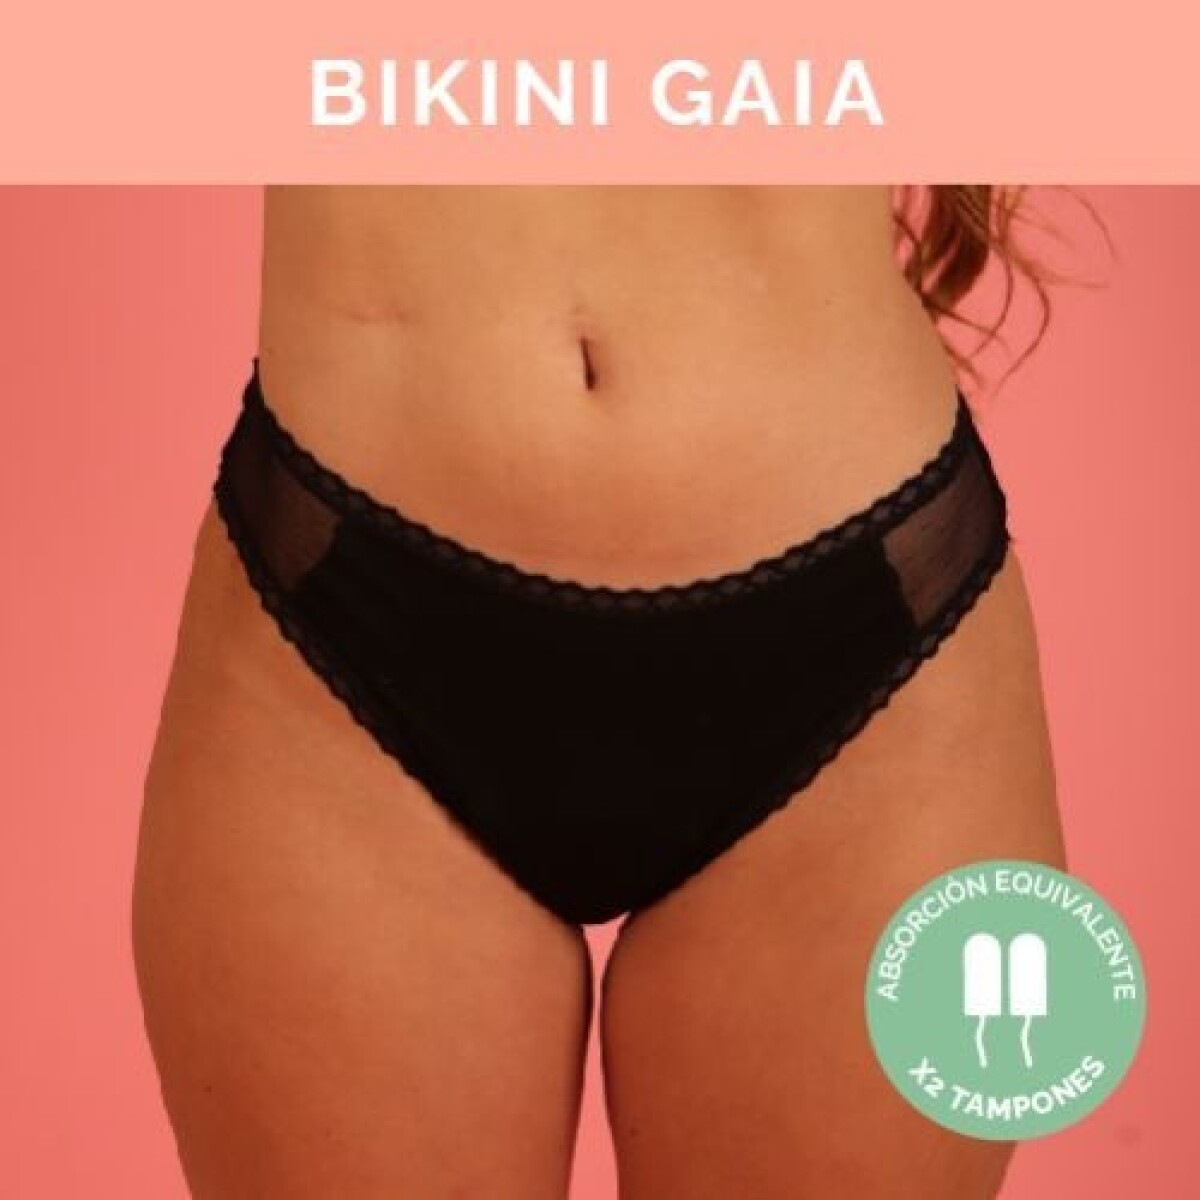 Bombacha Menstrual Bikini Gaia Puntilla Talle L 